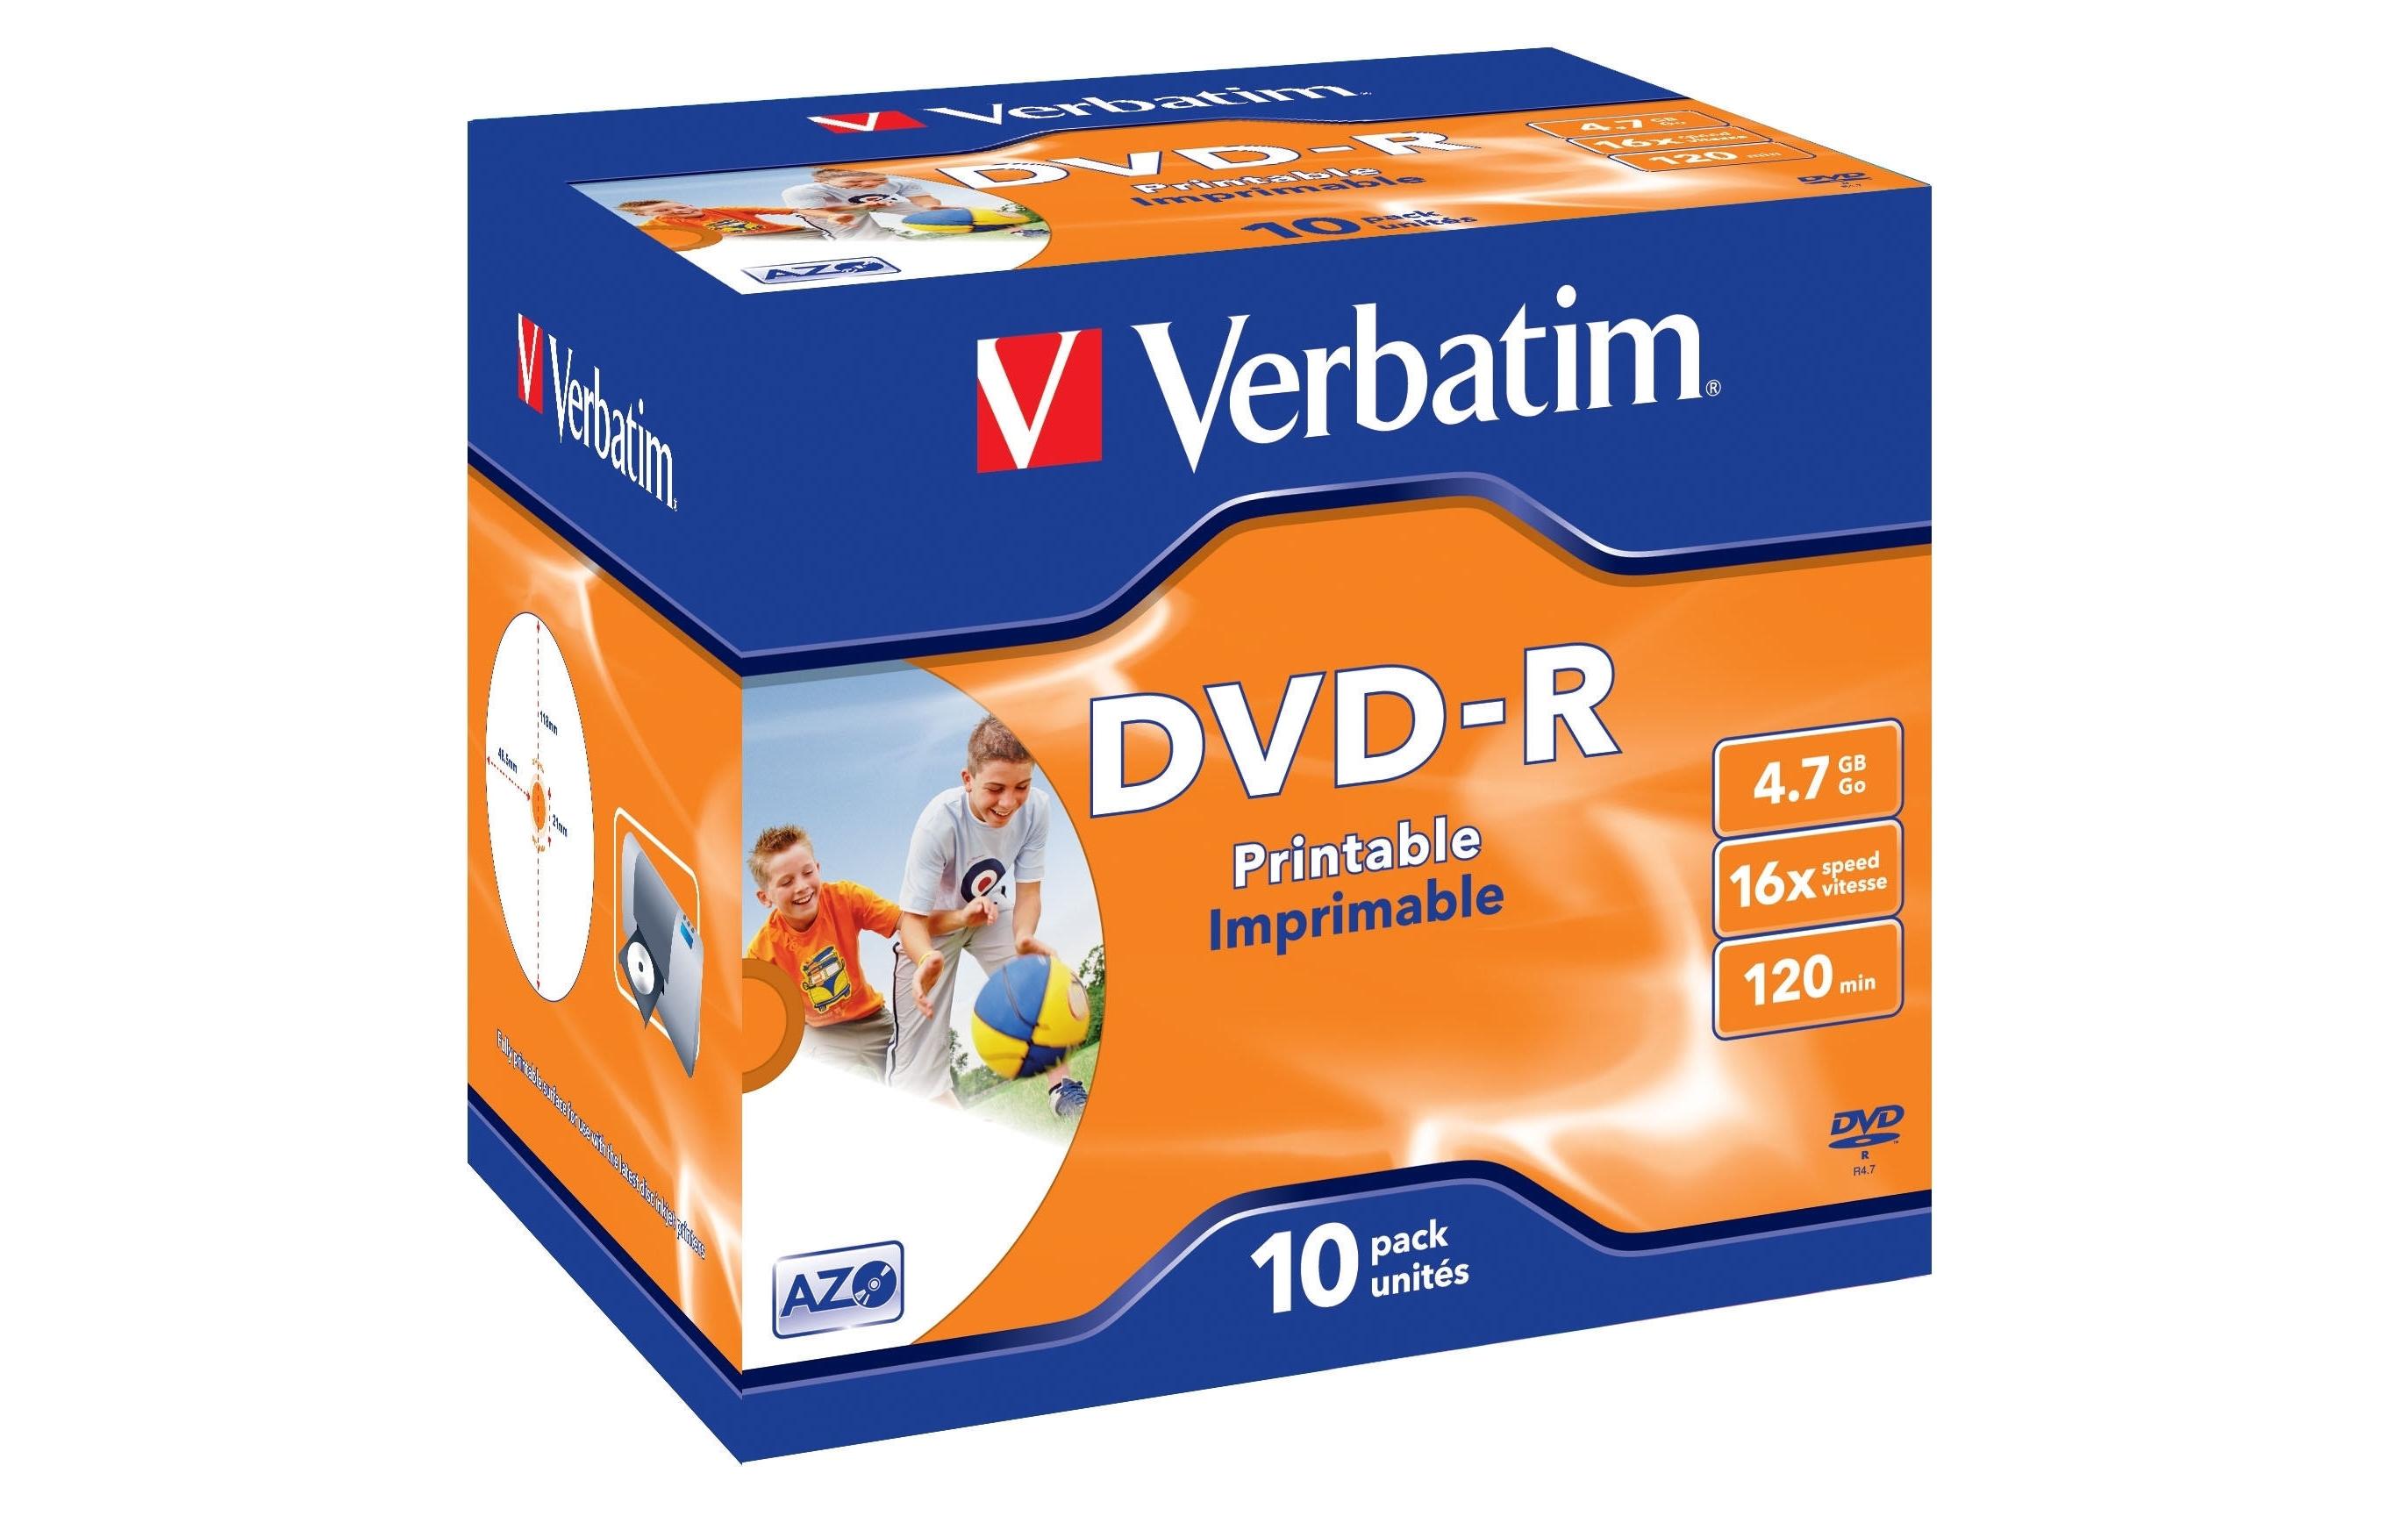 Verbatim DVD-R 4.7 GB, Jewelcase (10 Stück)